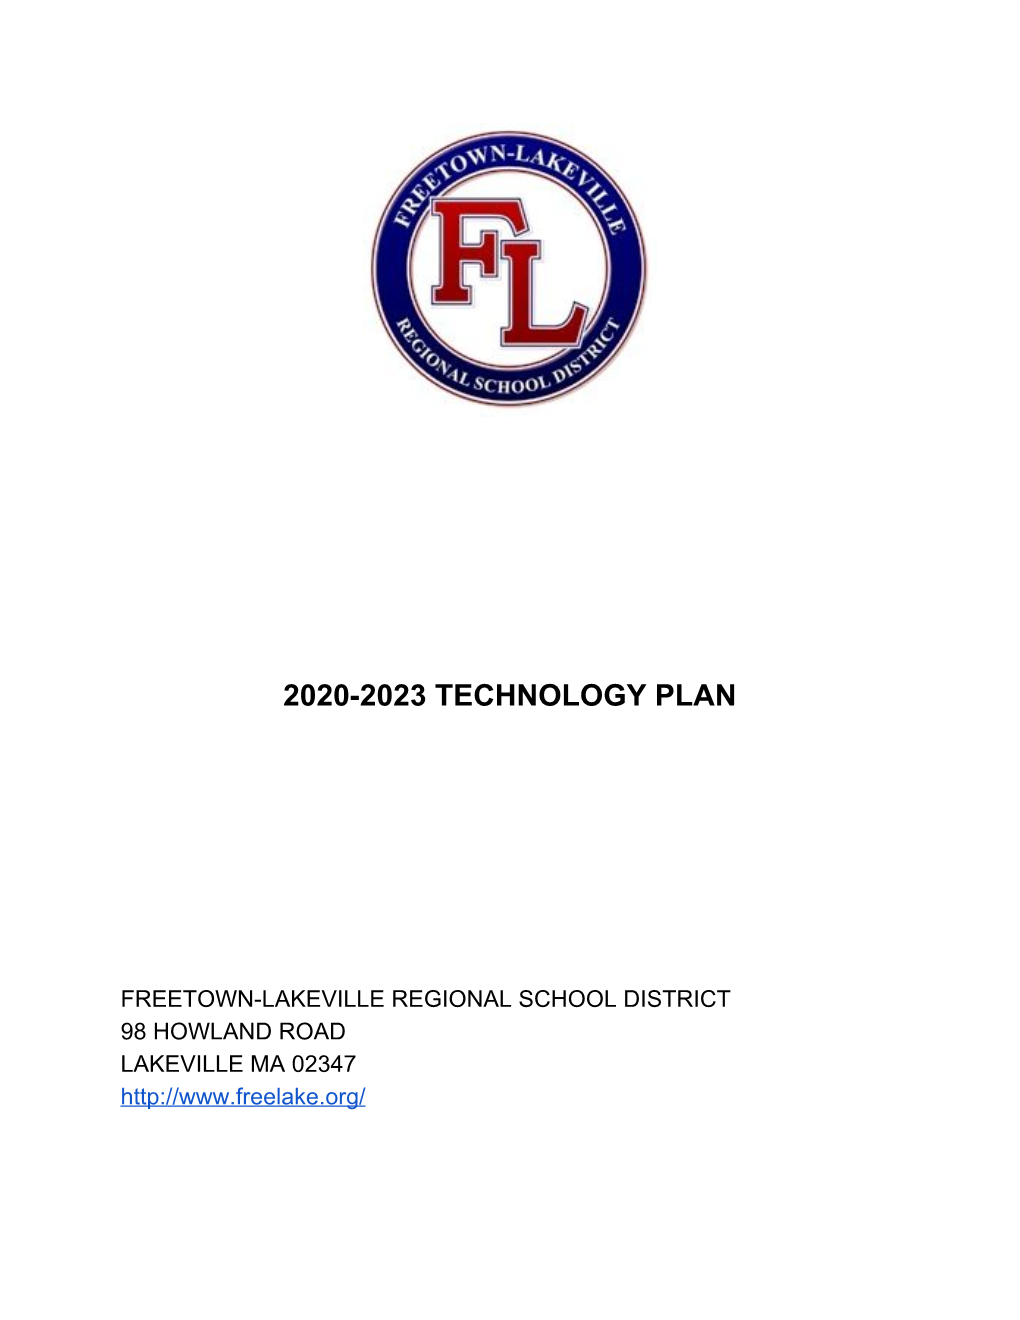 FLRSD 2020-2023 Technology Plan